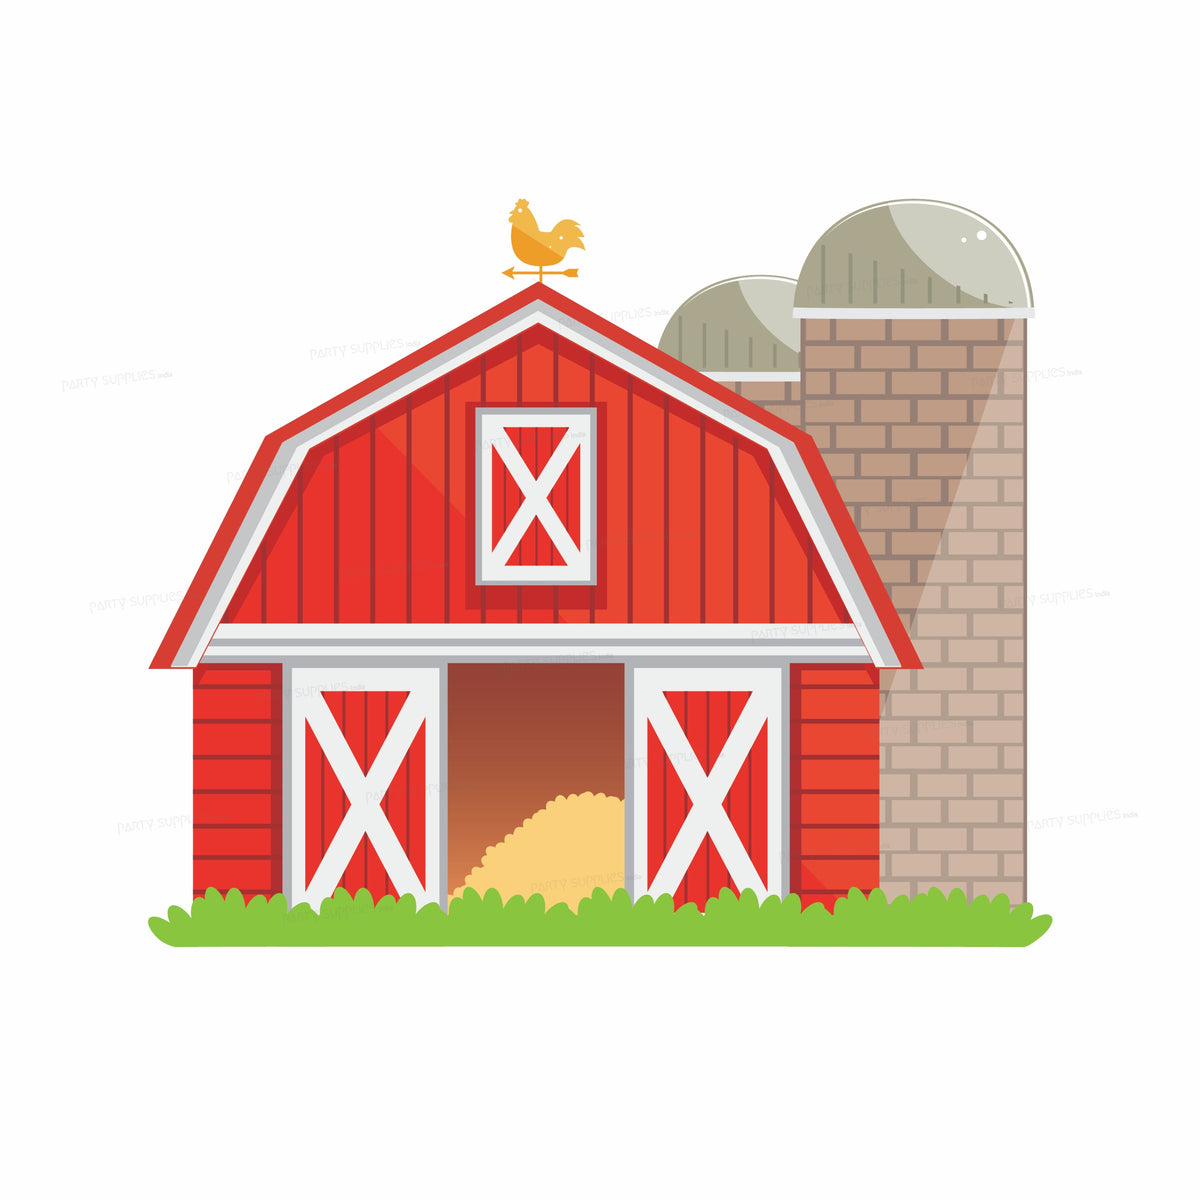 PSI Farm Theme Cutout - 06